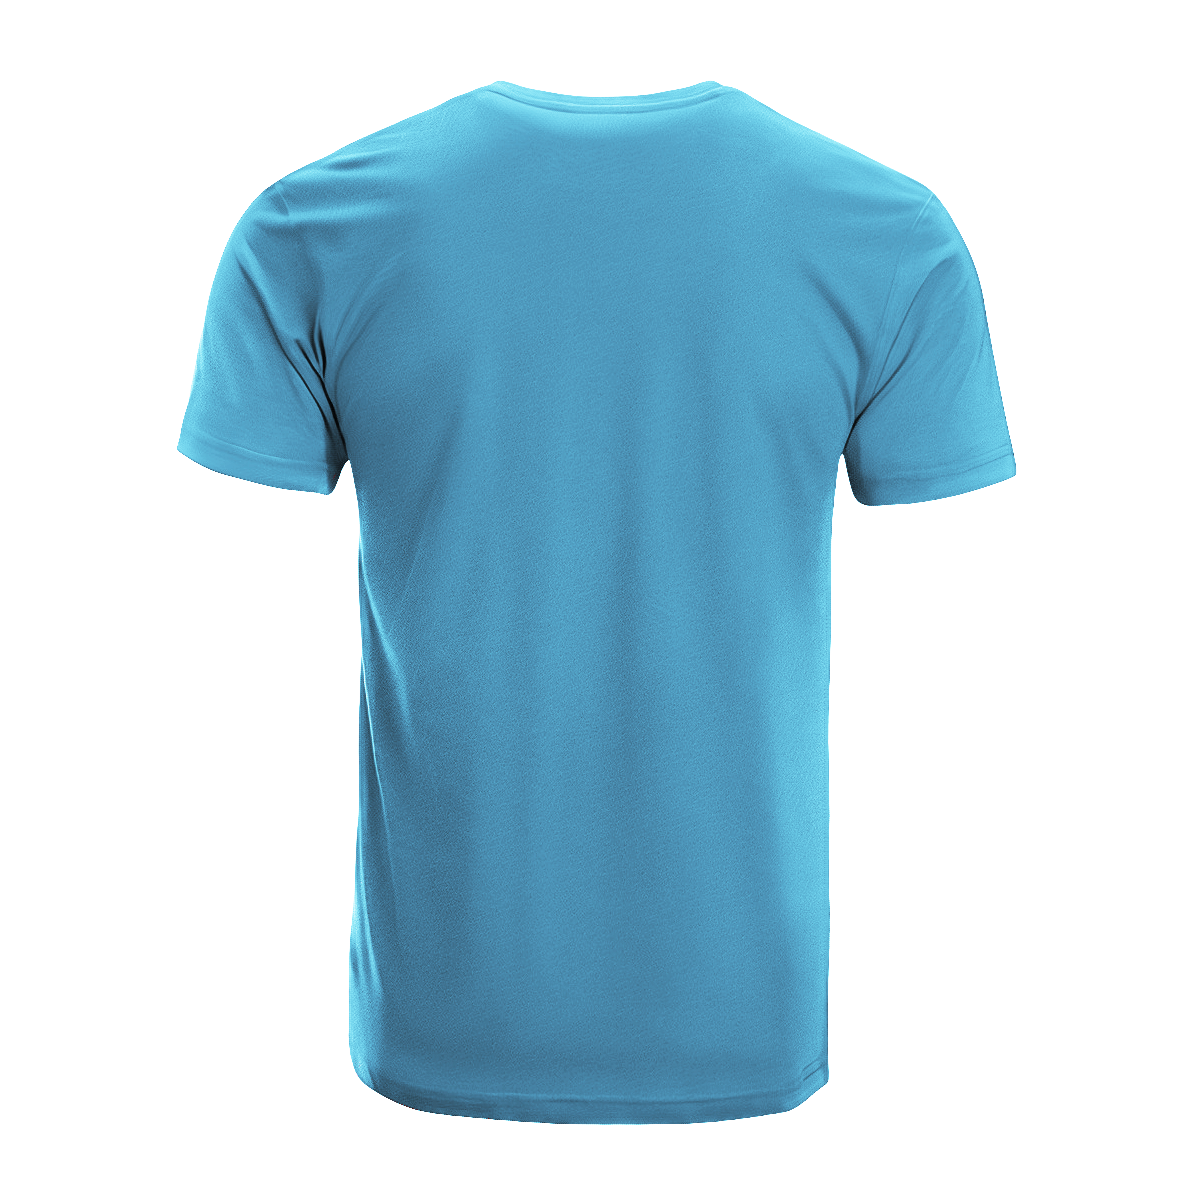 Kinninmont Tartan Crest T-shirt - I'm not yelling style